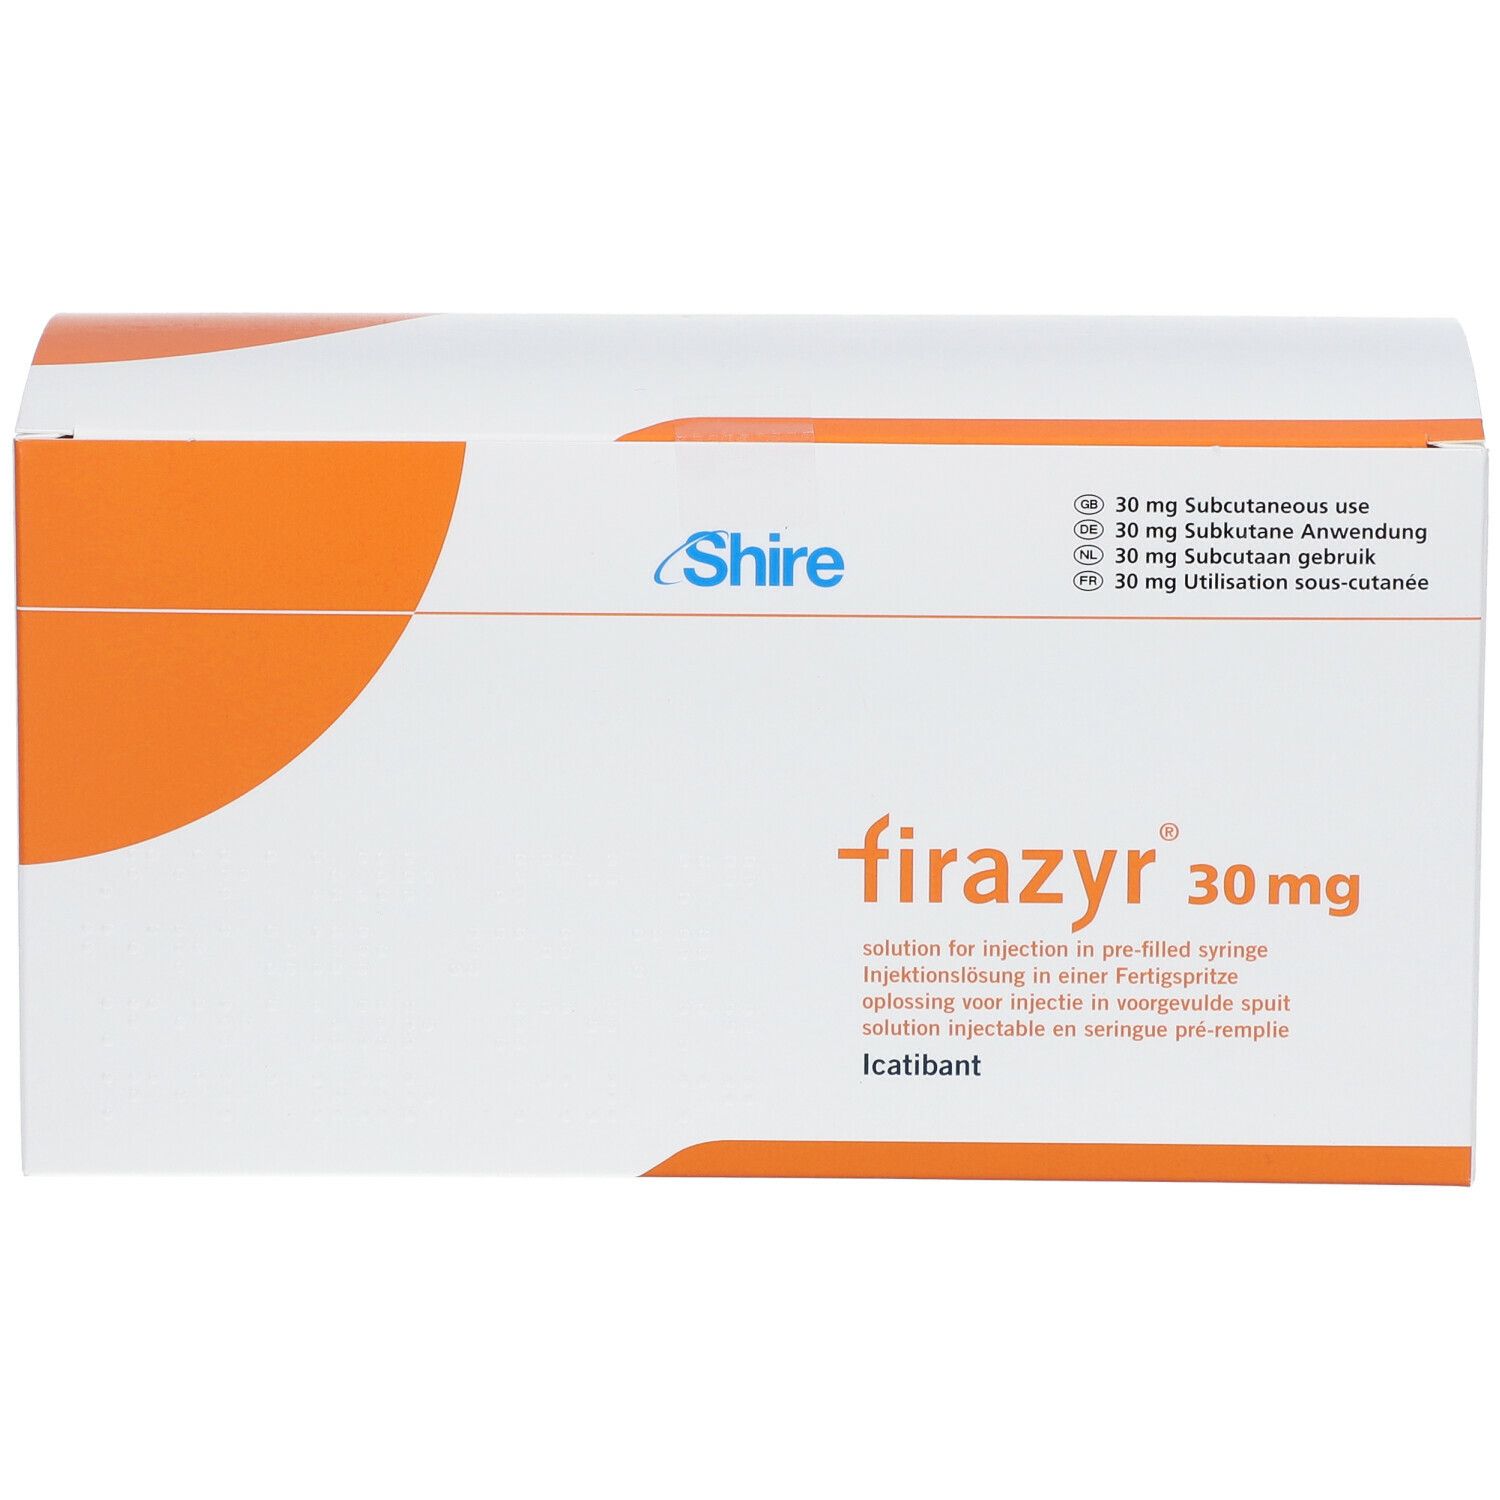 Firazyr® 30 mg